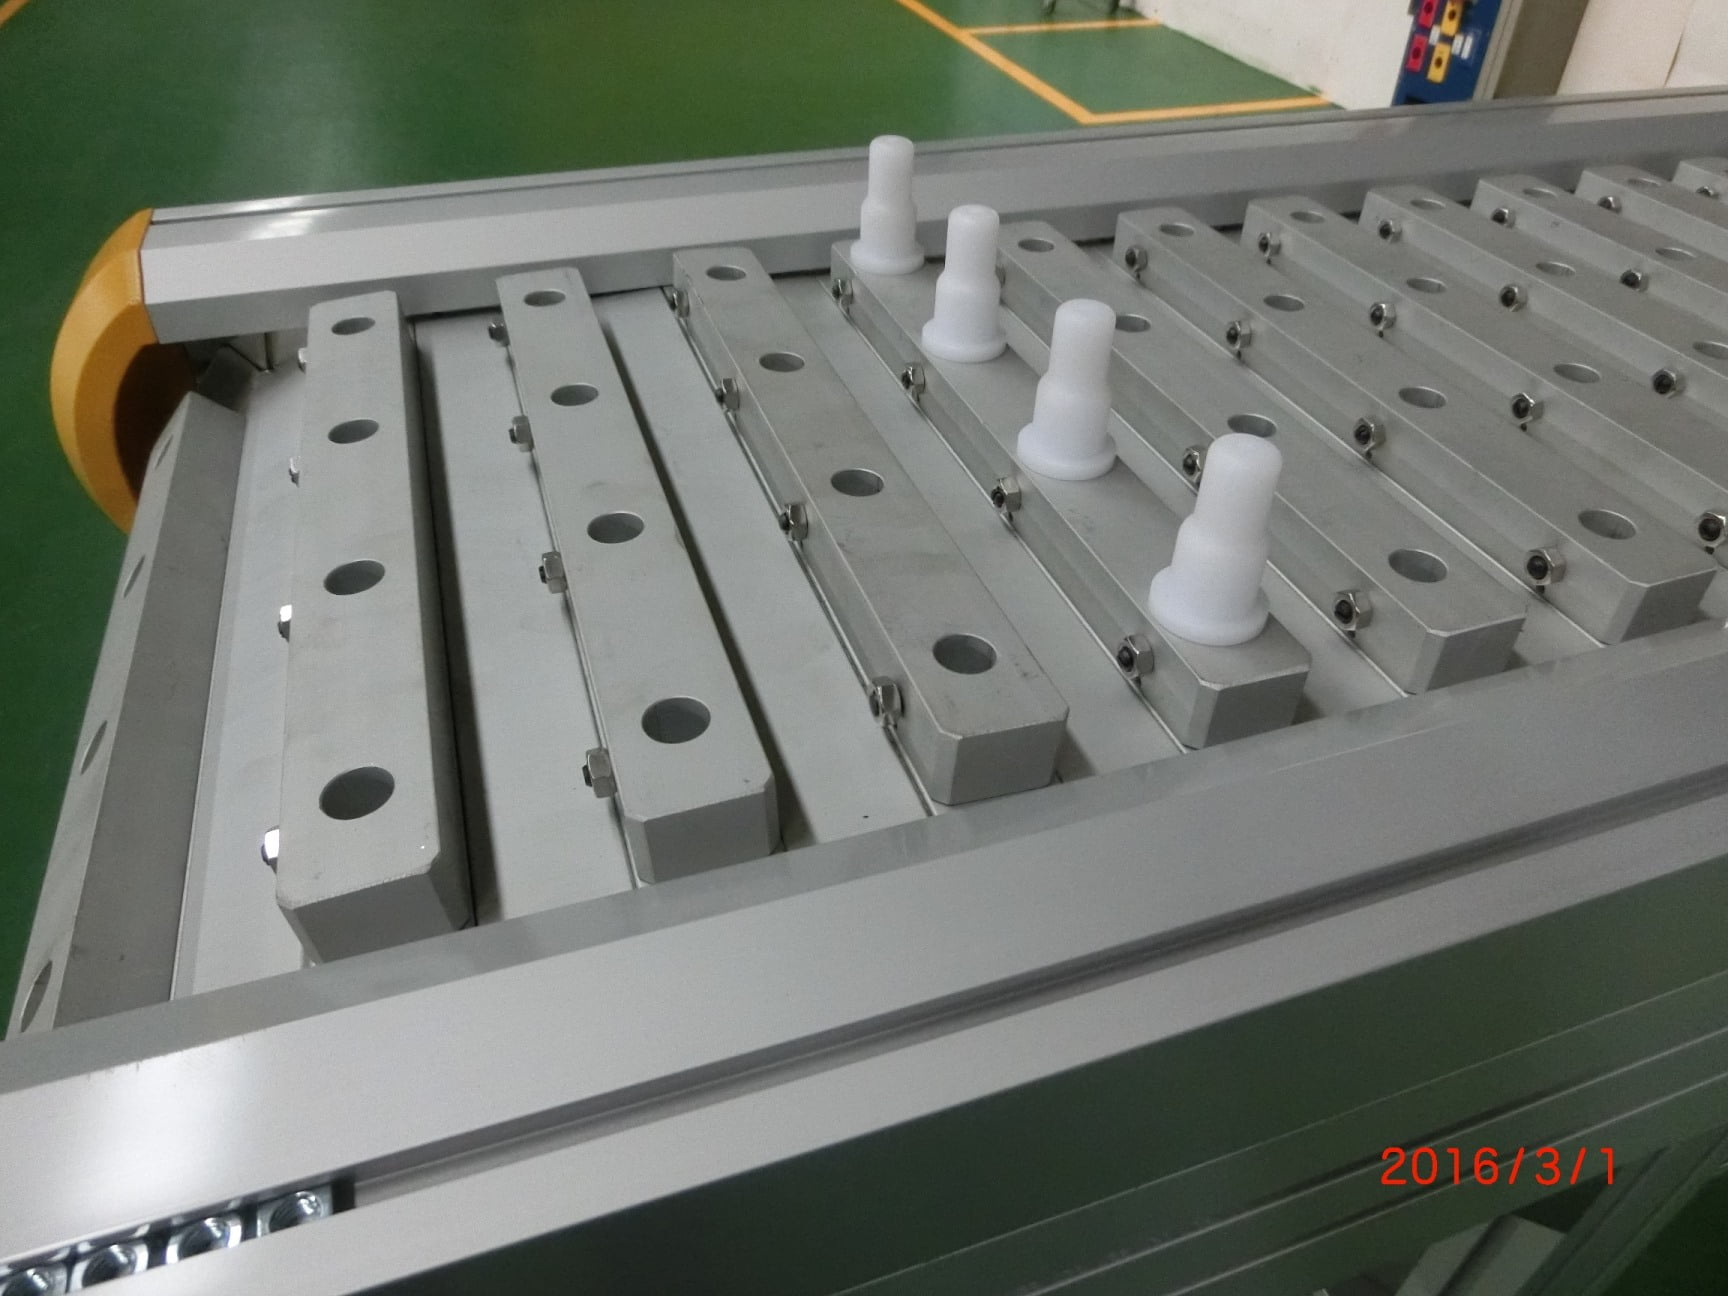 Positioning Aluminum Band Conveyor